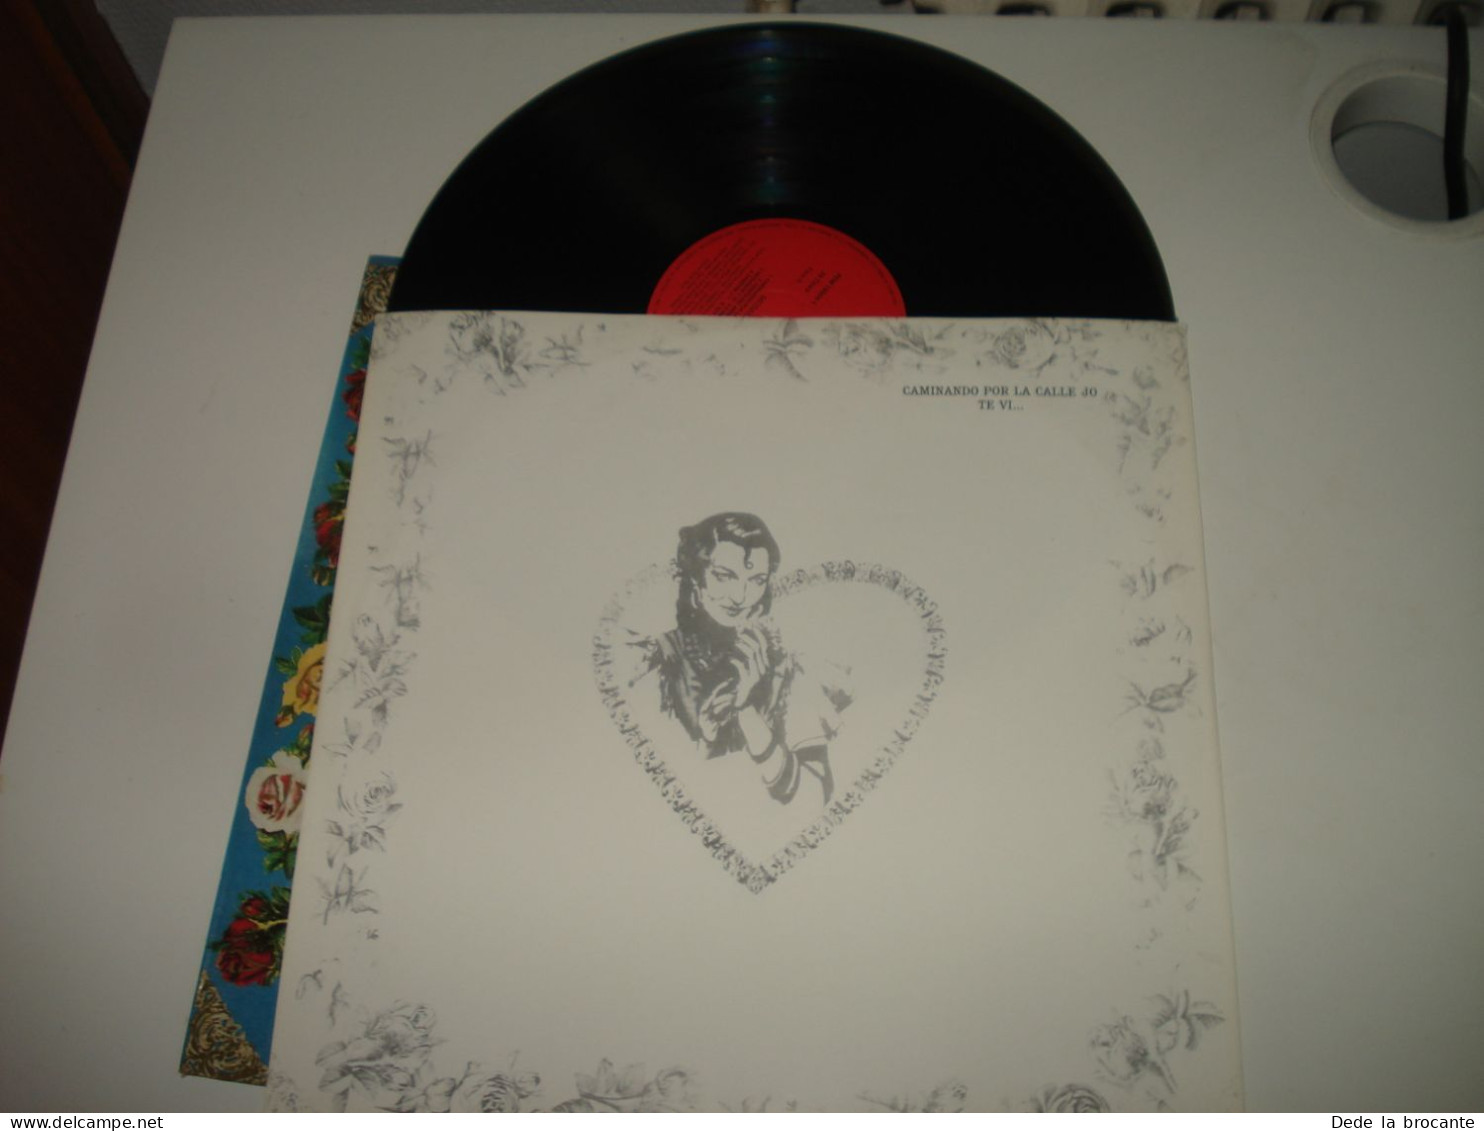 B9 / Gipsy Kings – Mosaïque - LP - Vanessa – 15 504-1 - France  1989  EX/N.M - Country En Folk